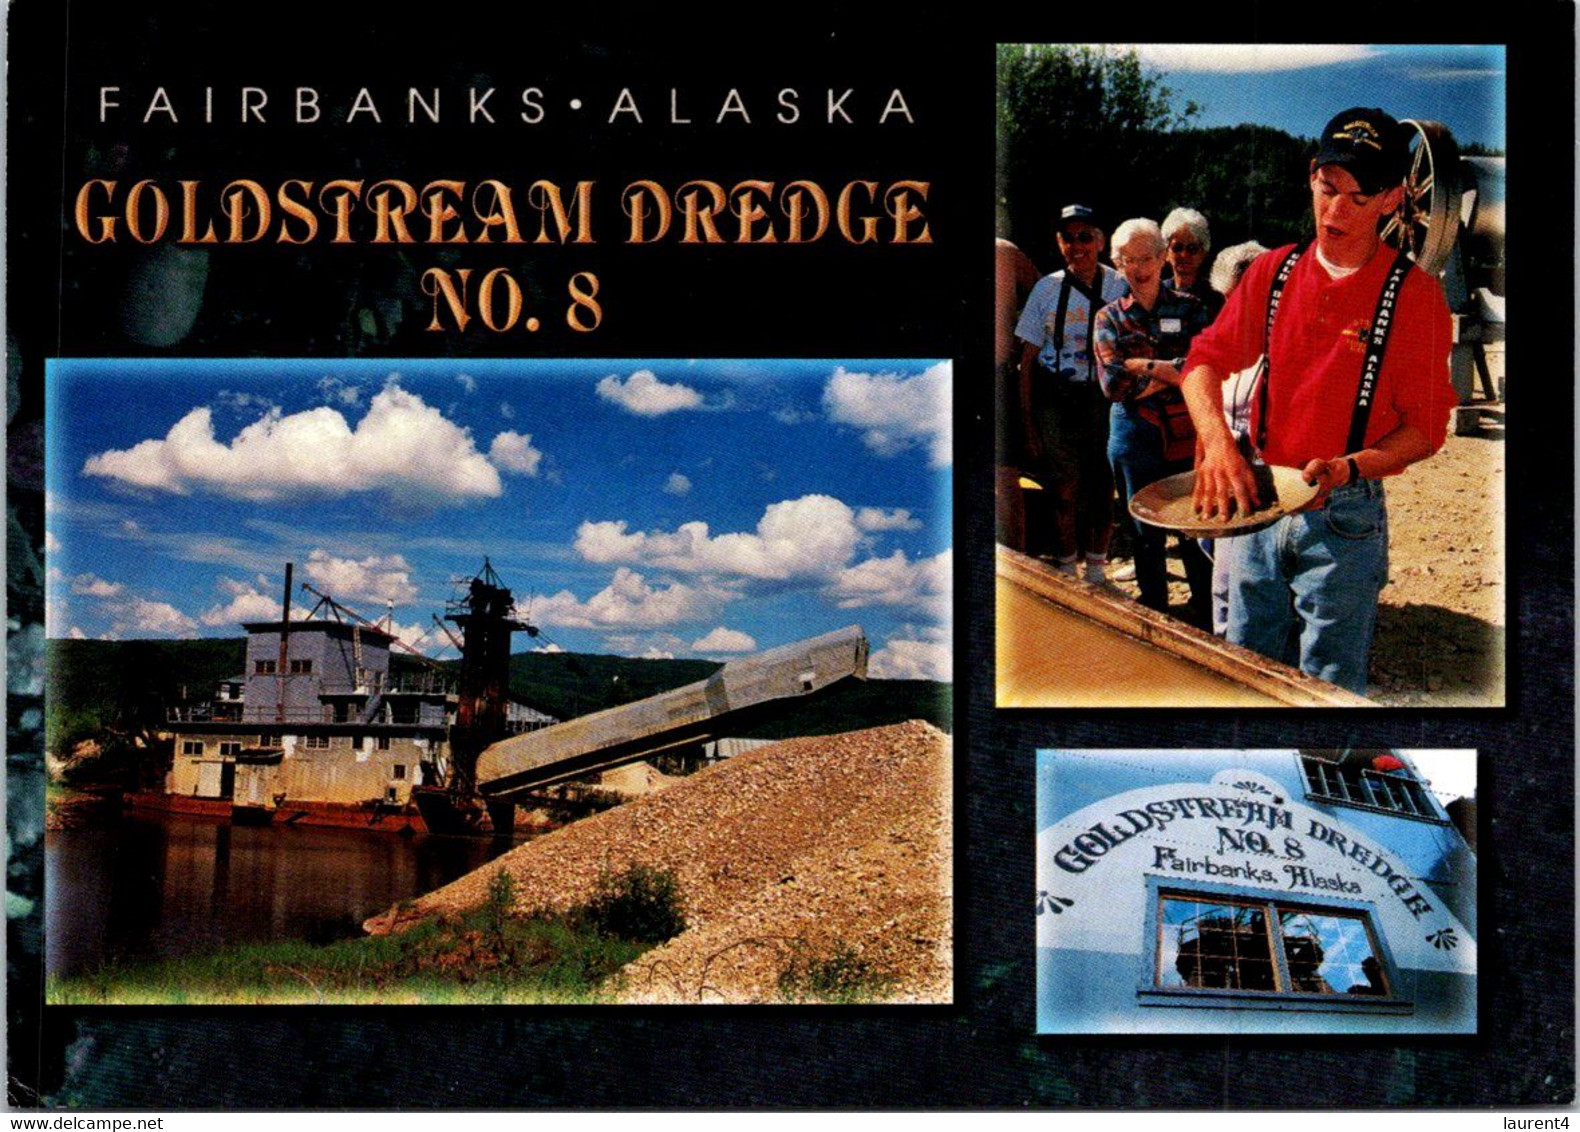 (1 L 46) USA - Alsaka - Firabanks Dredge # 8 - Fairbanks